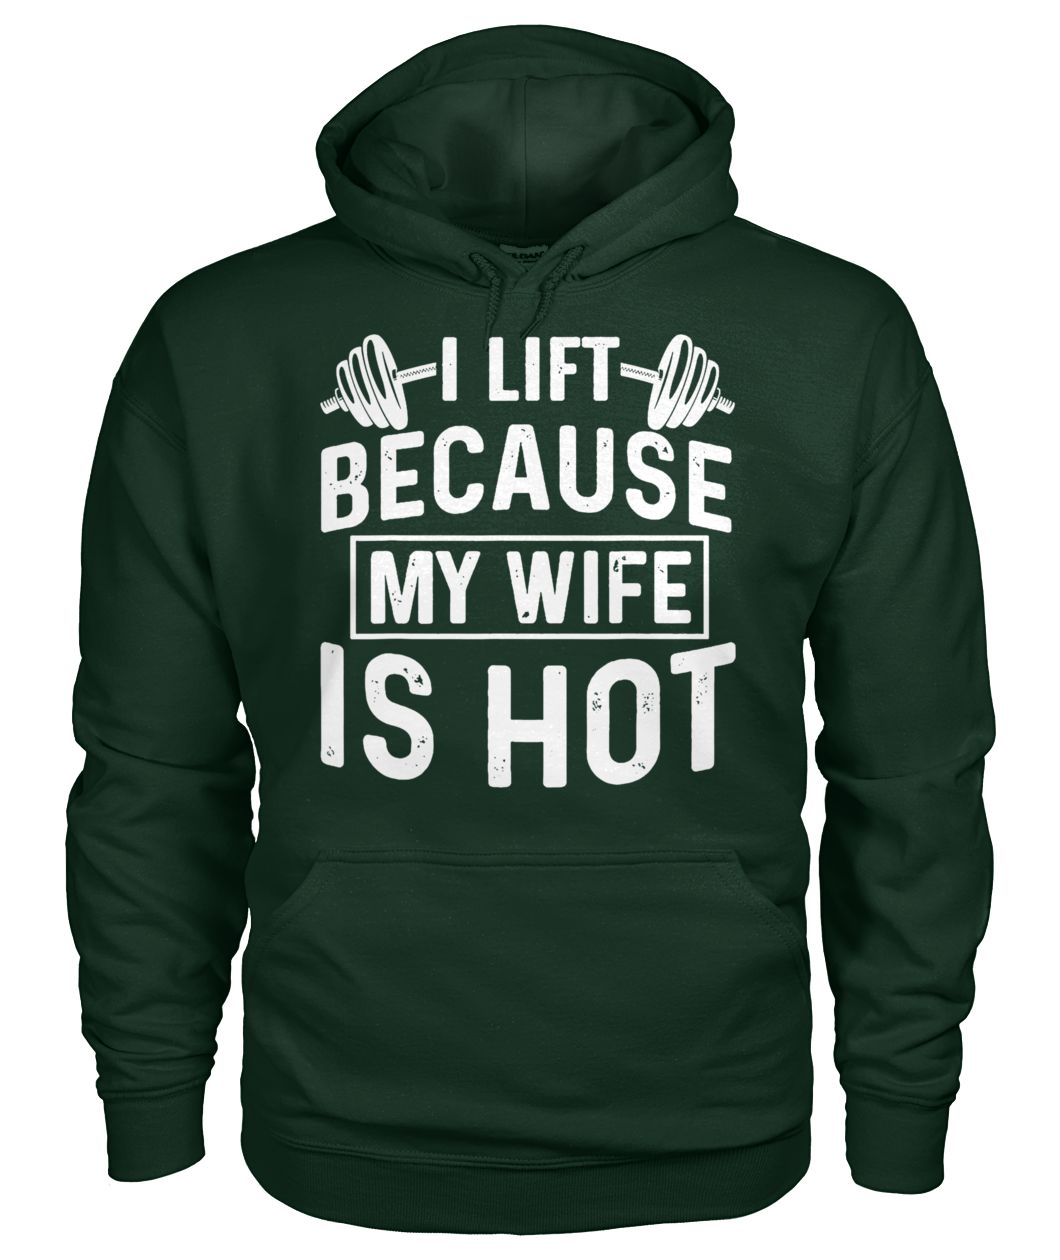 I lift because my wife is hot gildan hoodie